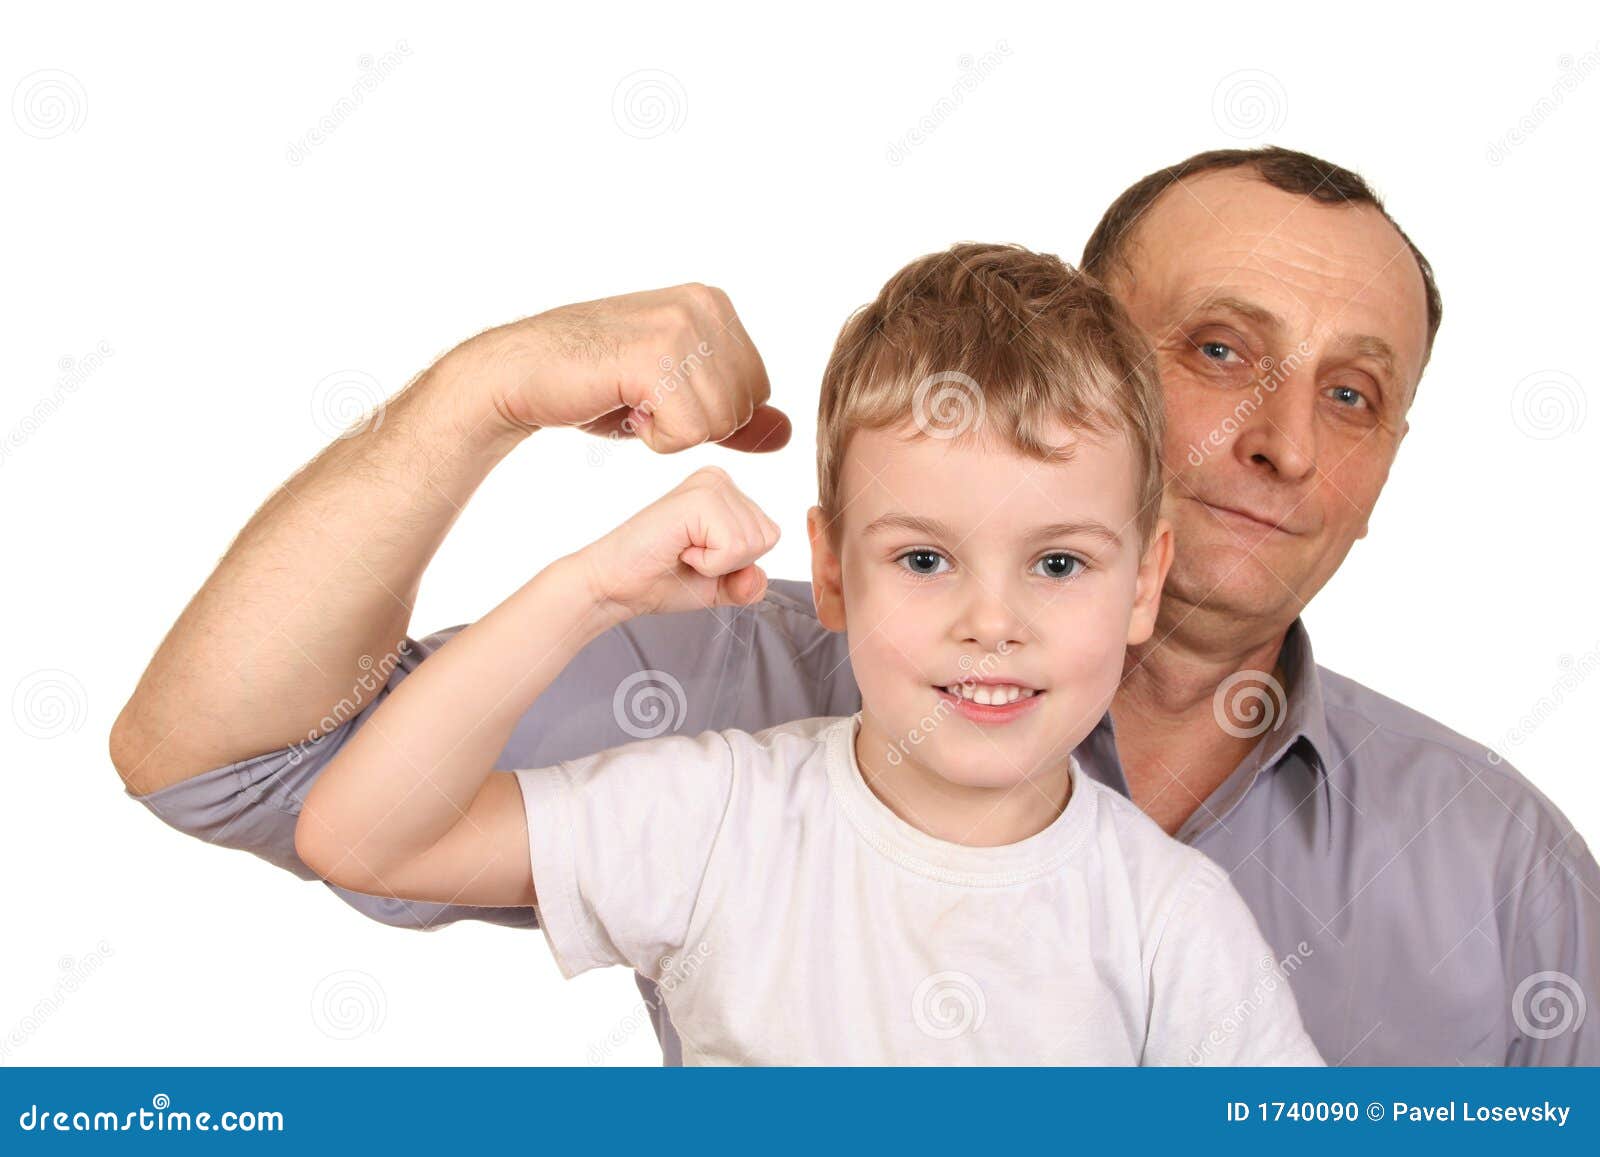 grandfather child biceps